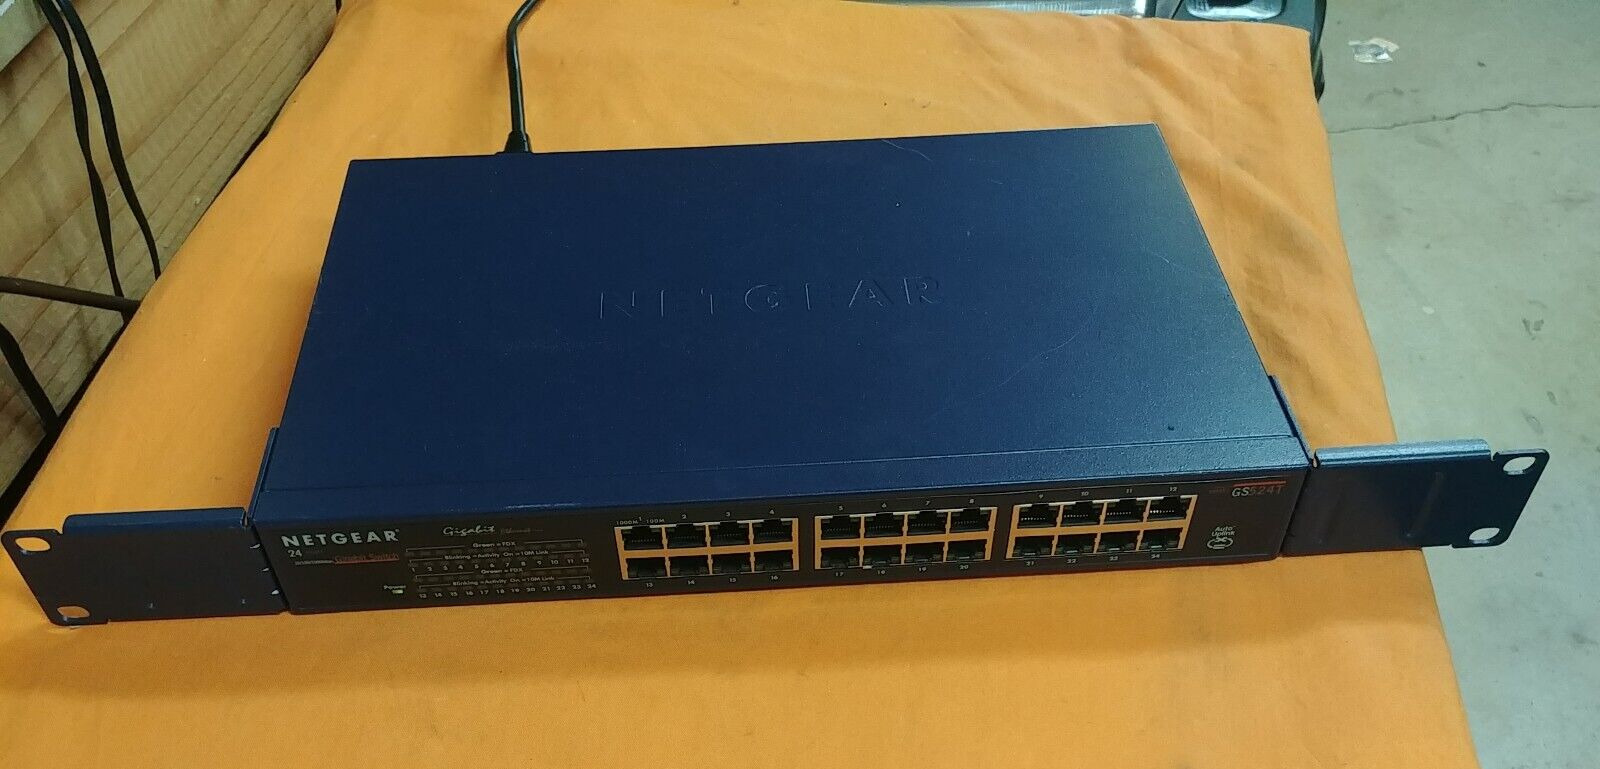 Netgear GS524T 24-Port 10/100/1000 Mbps Gigabit Ethernet Switch